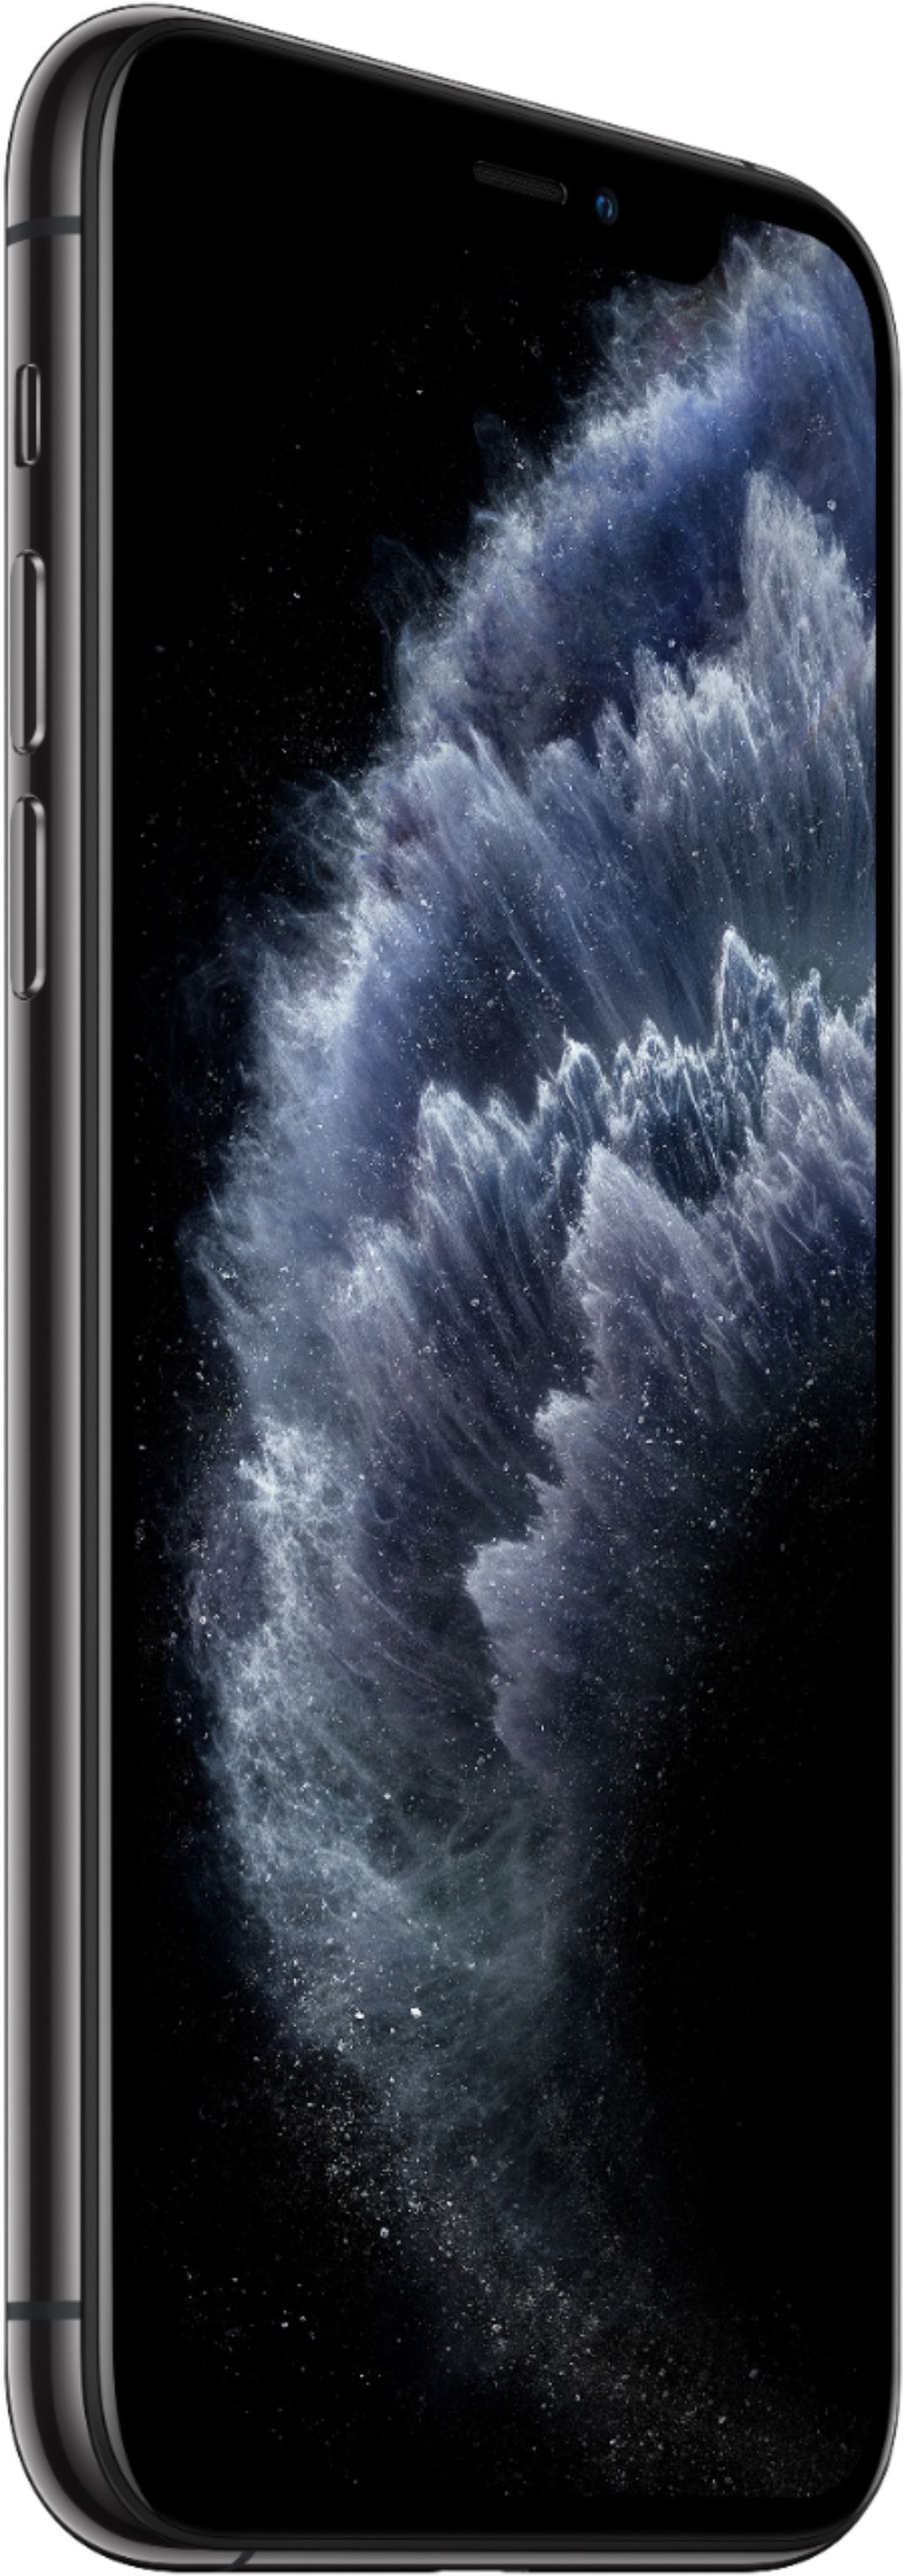 Best Buy: Apple iPhone 11 Pro 512GB Space Gray (Unlocked) MWAX2LL/A